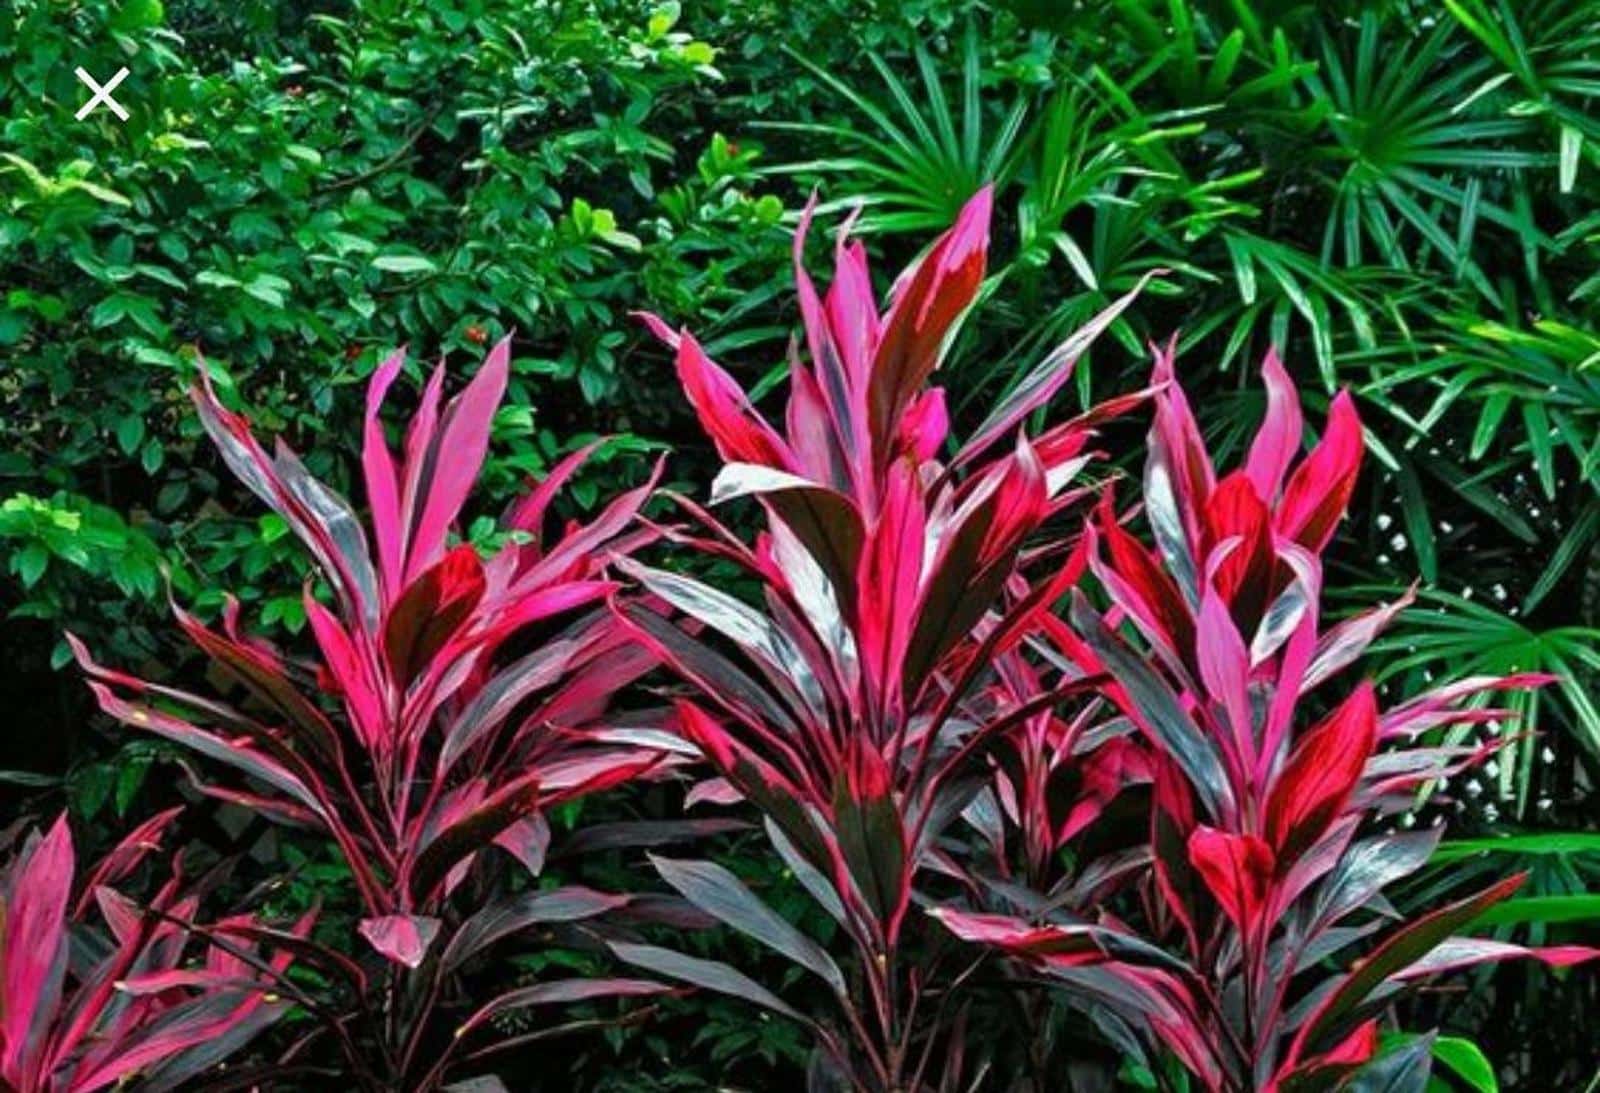  Lær om den røde dracen, og hvordan du dyrker denne eksotiske art.